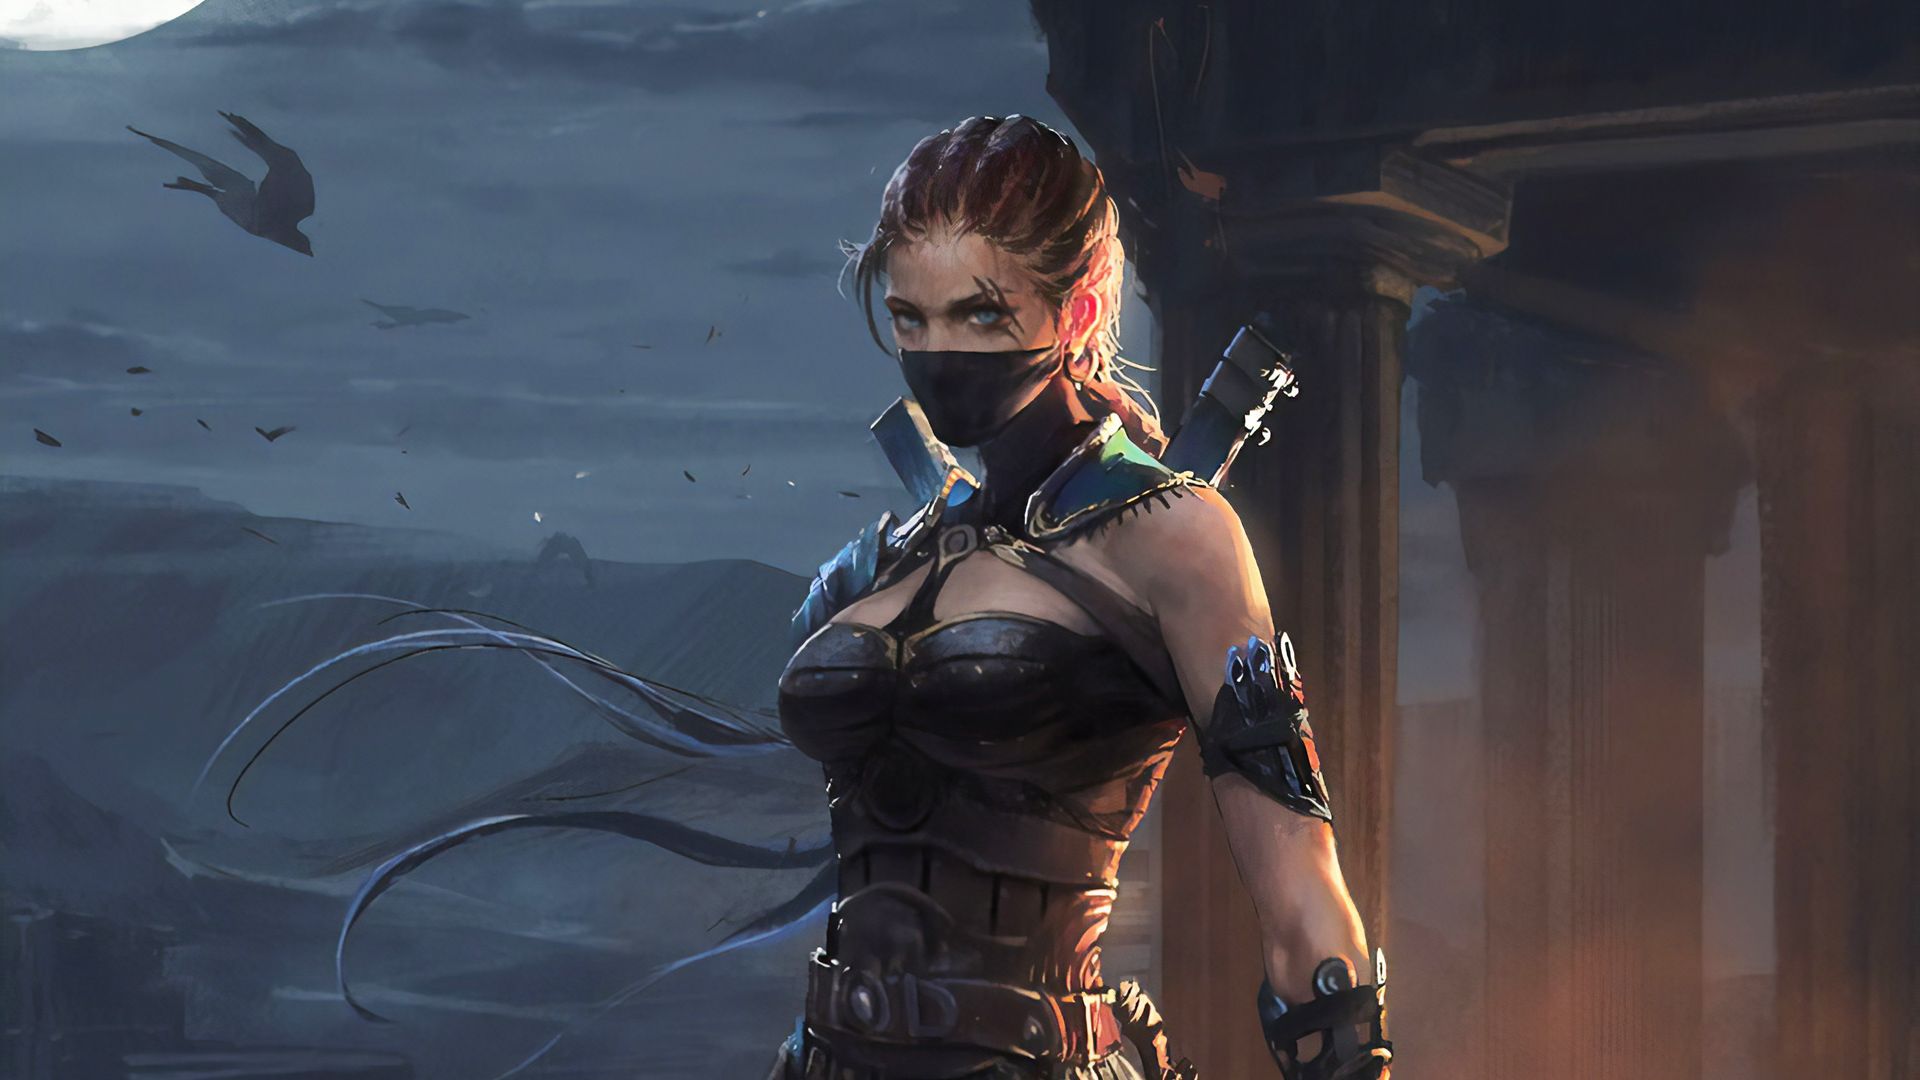 Warrior Girl In Cyberpunk City Wallpapers